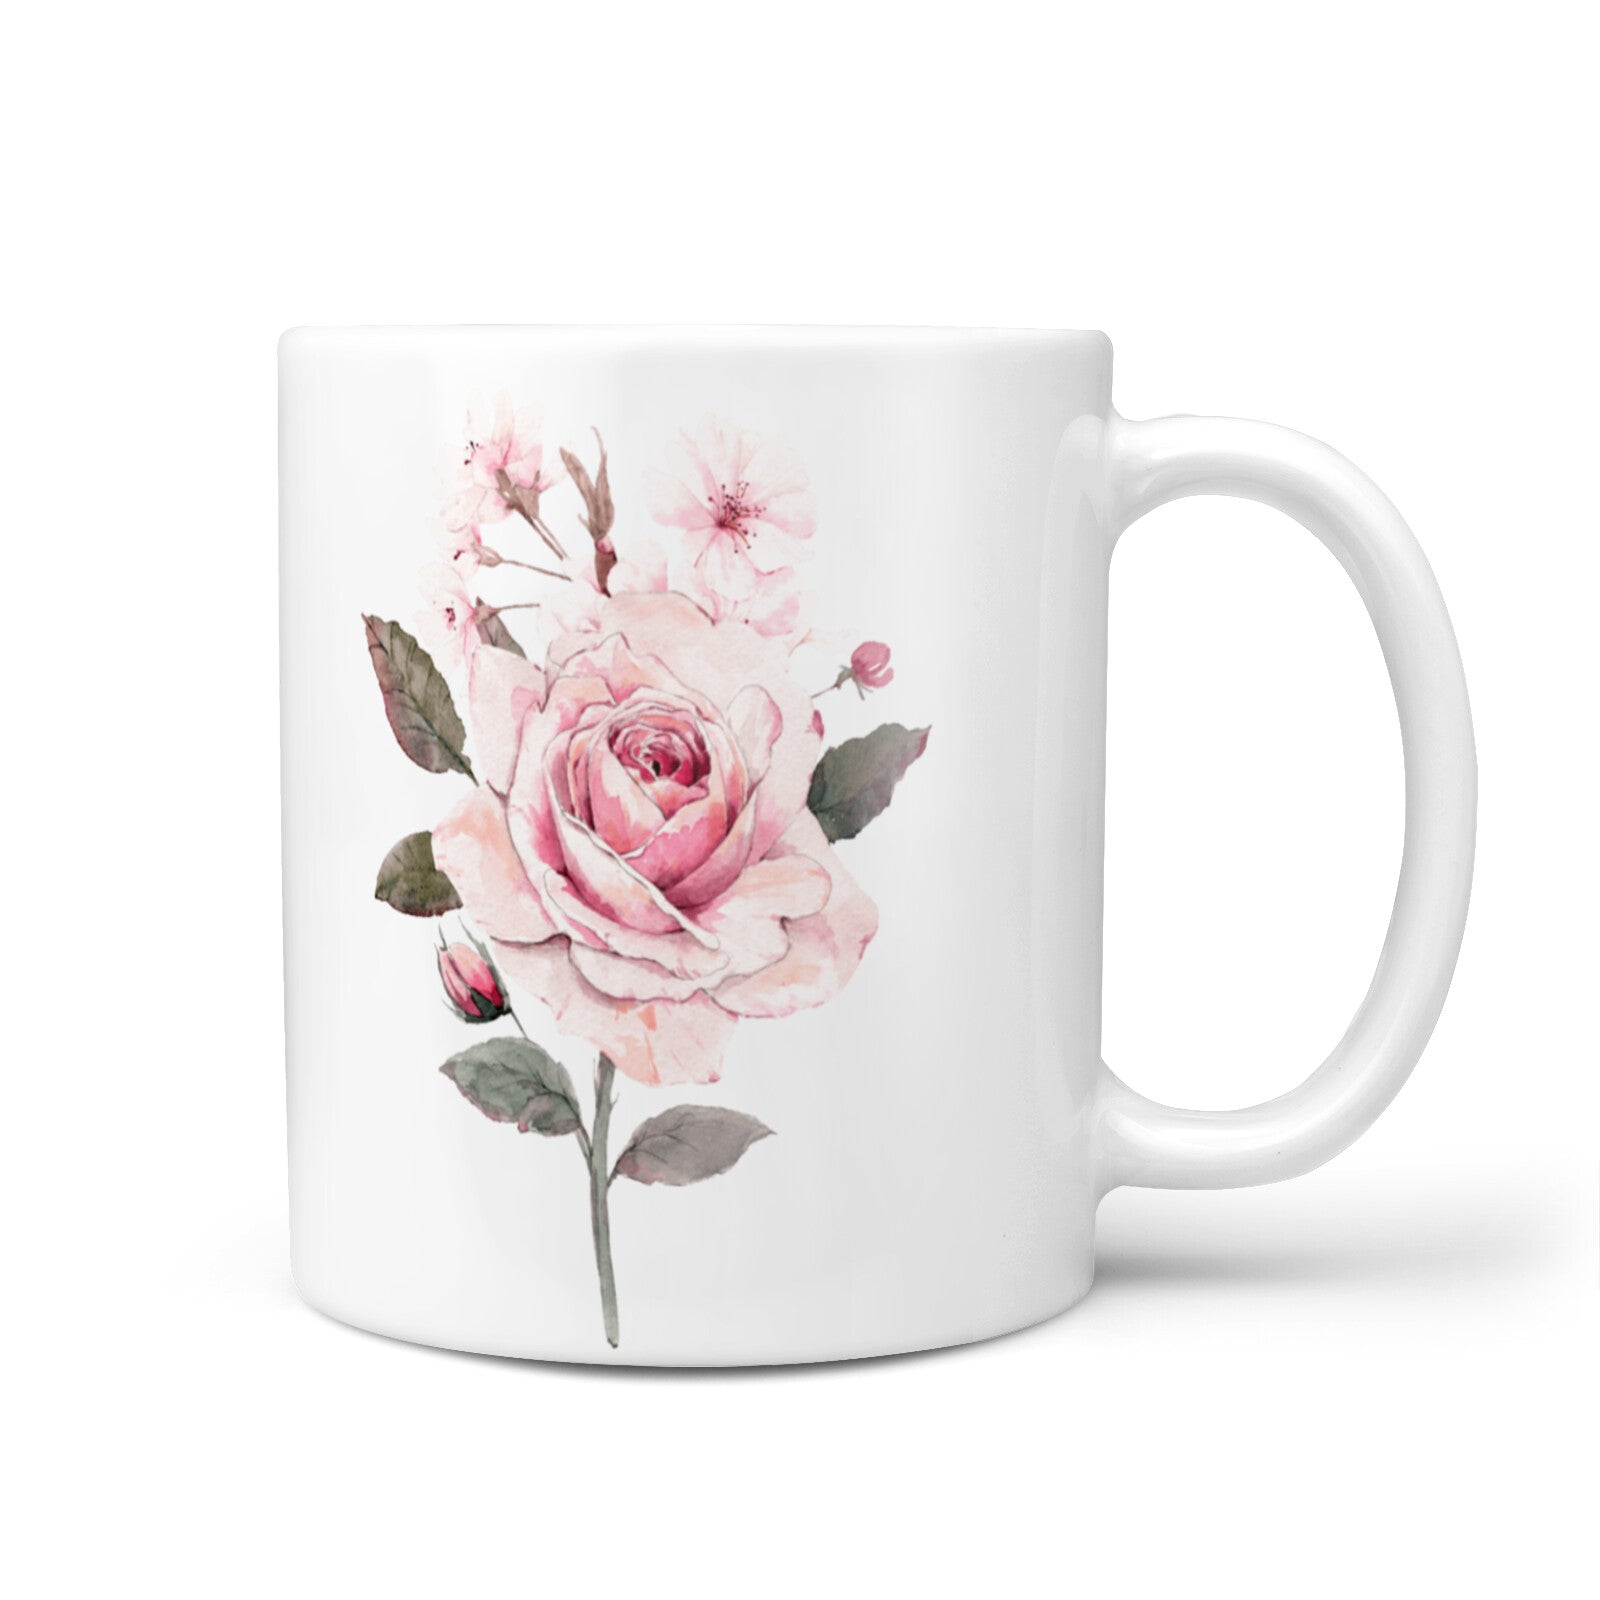 Personalised Rose with Name 10oz Mug